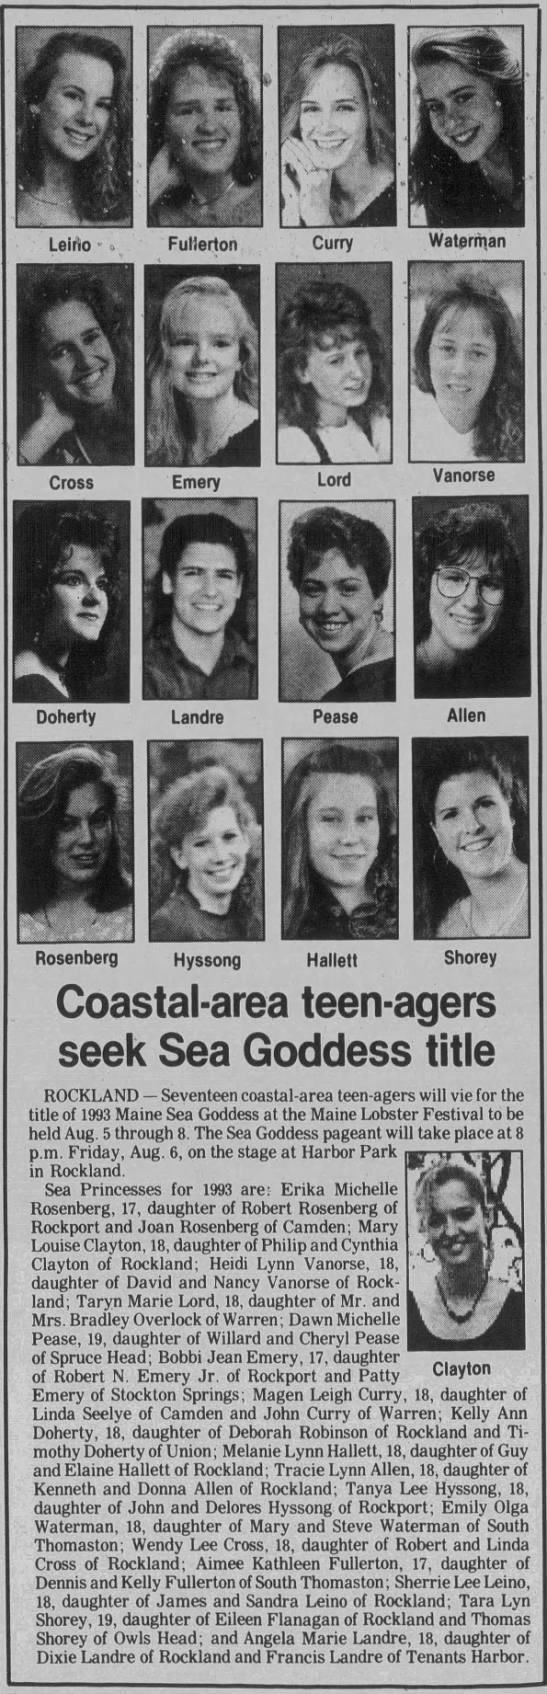 Sea Goddess Rockland 1993 - 